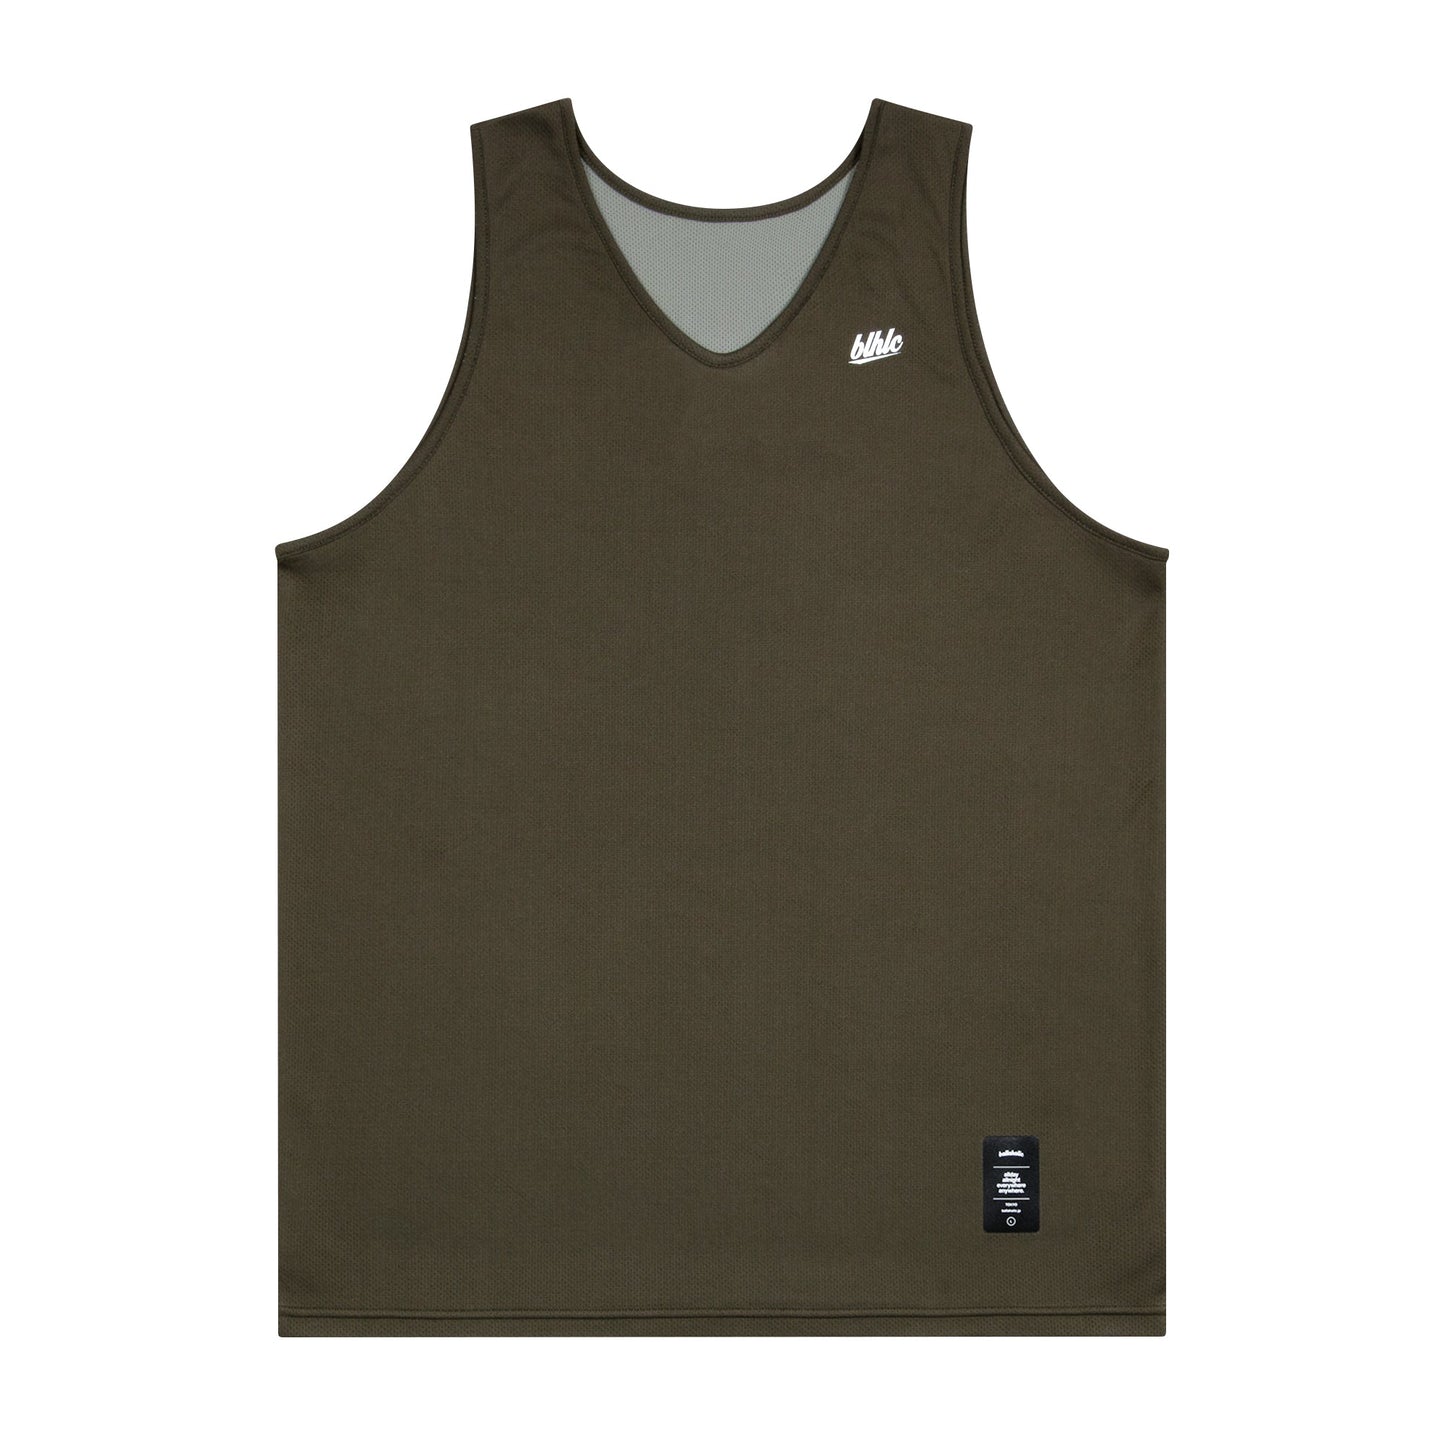 Basic Reversible Jersey (olive/gray) - CUSTOM